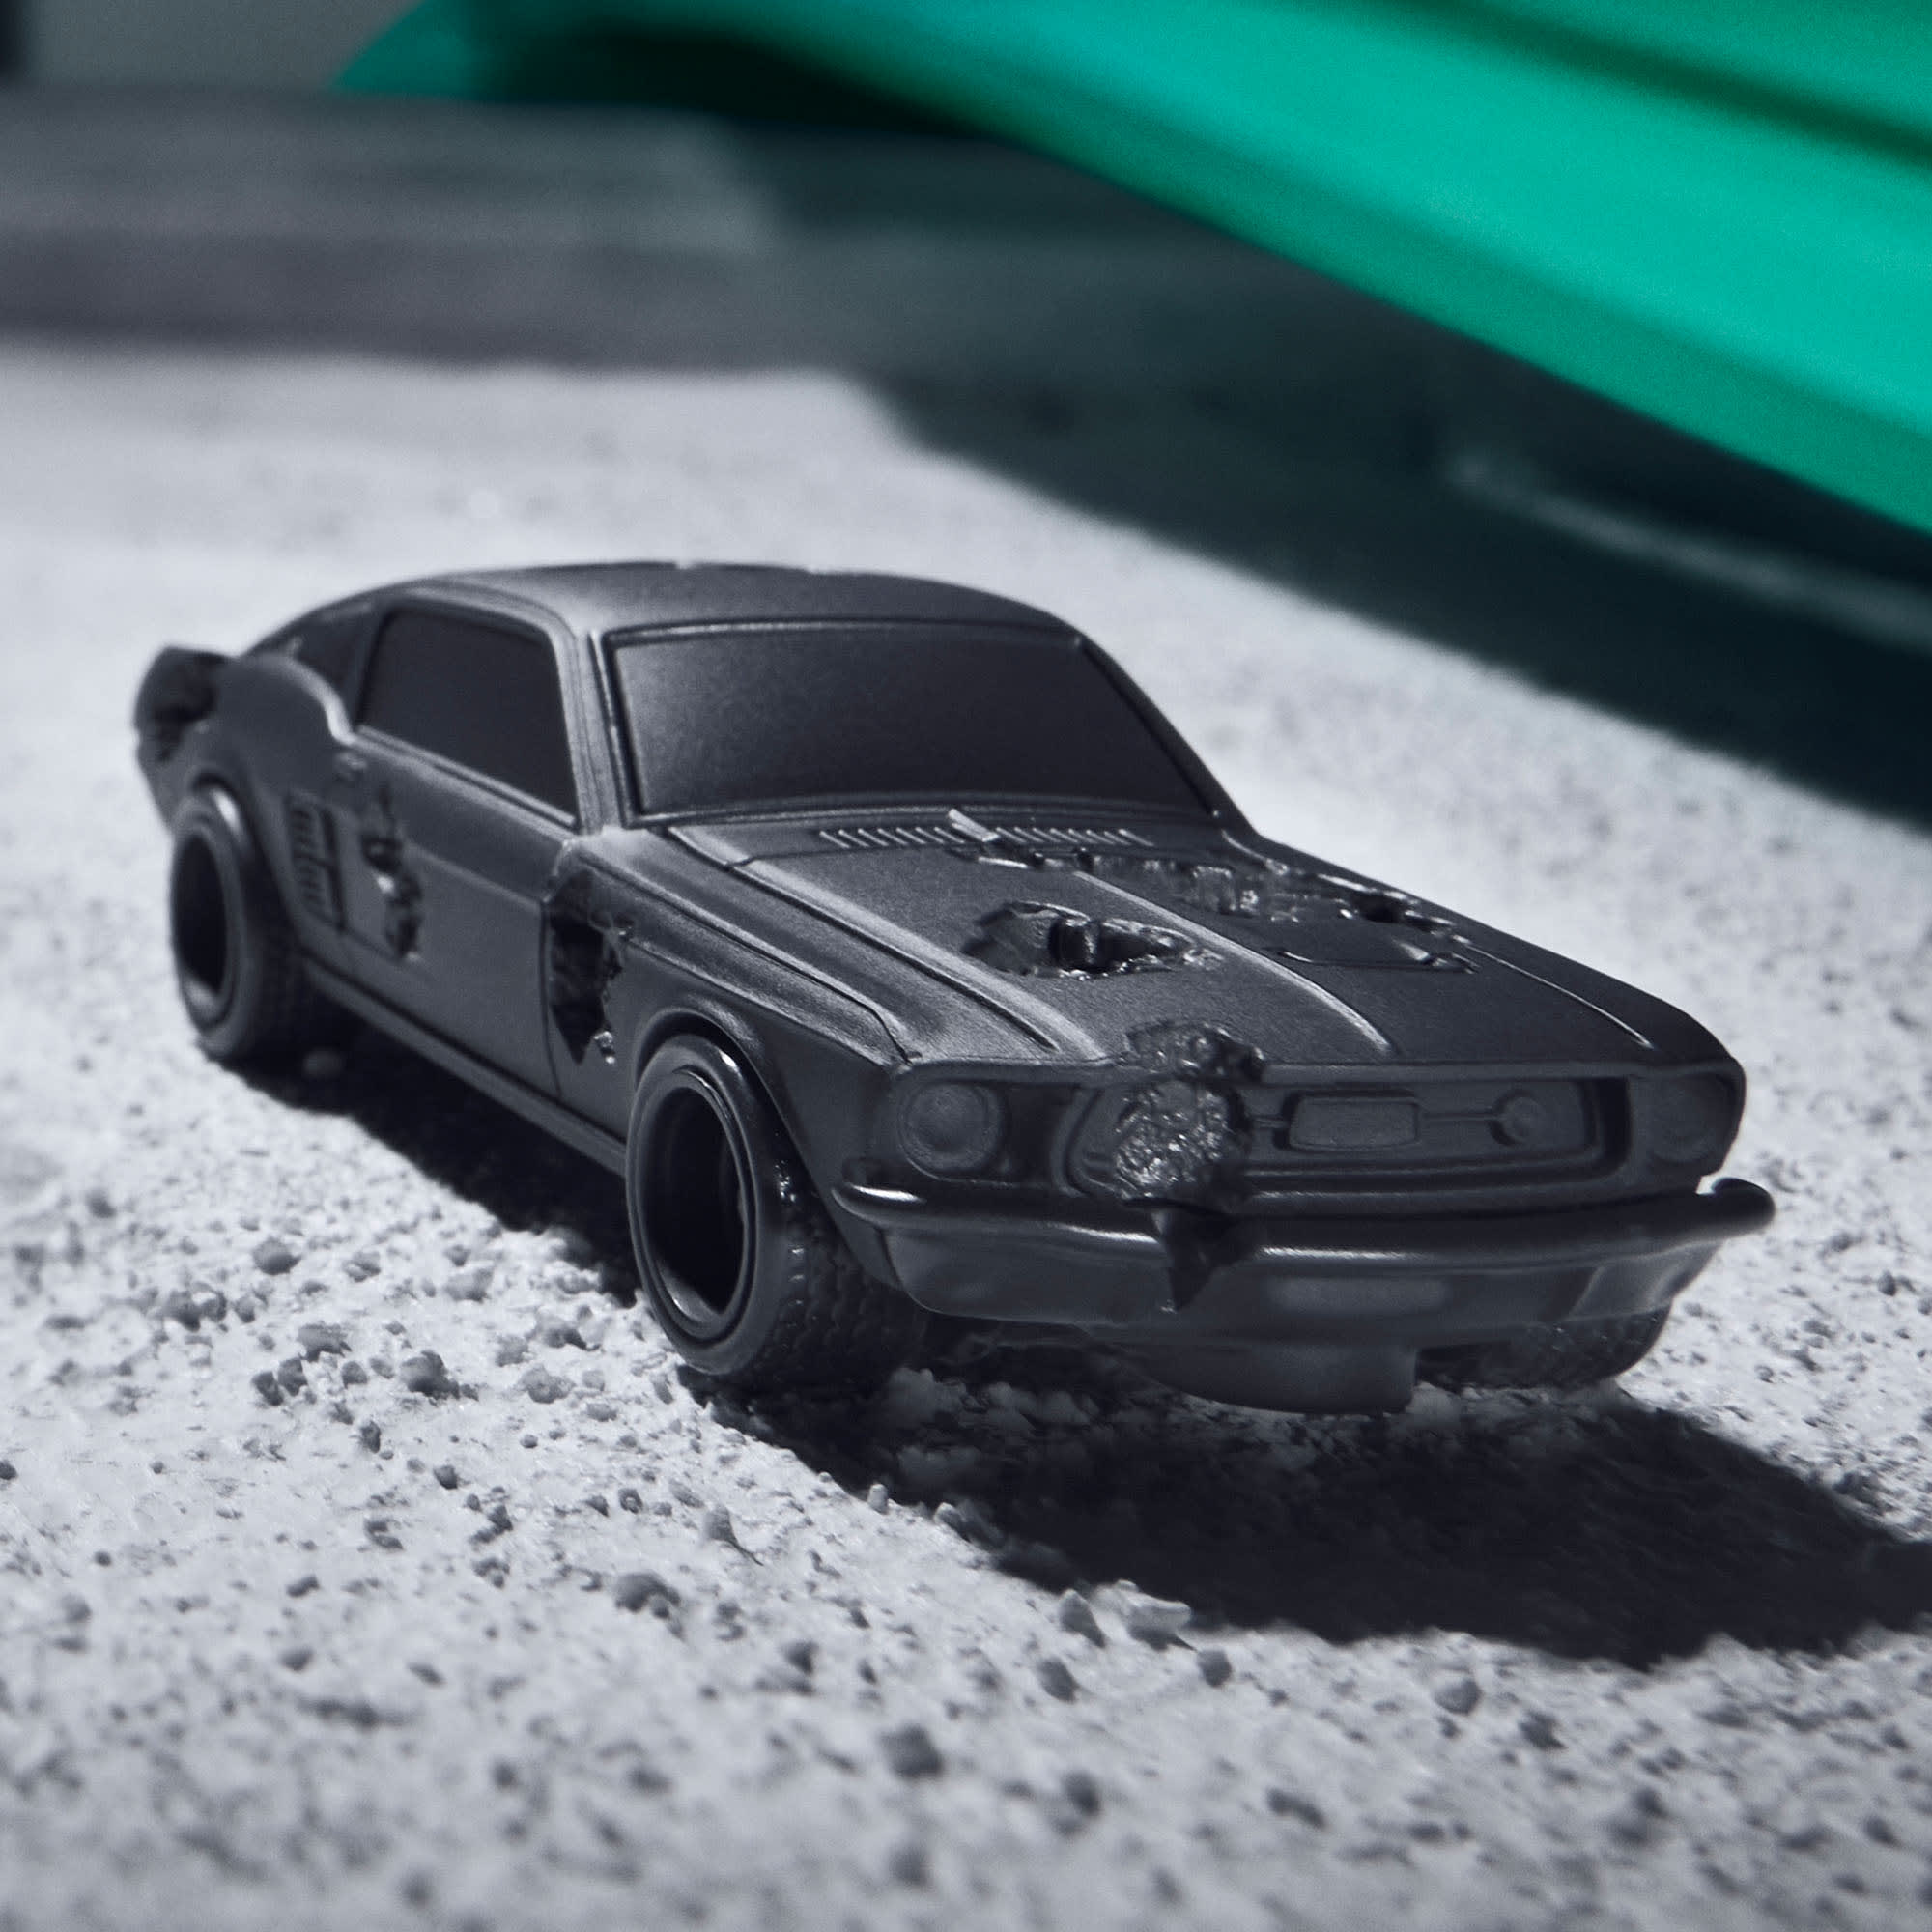 Hot Wheels x Daniel Arsham Eroded Mustang | Mattel Creations